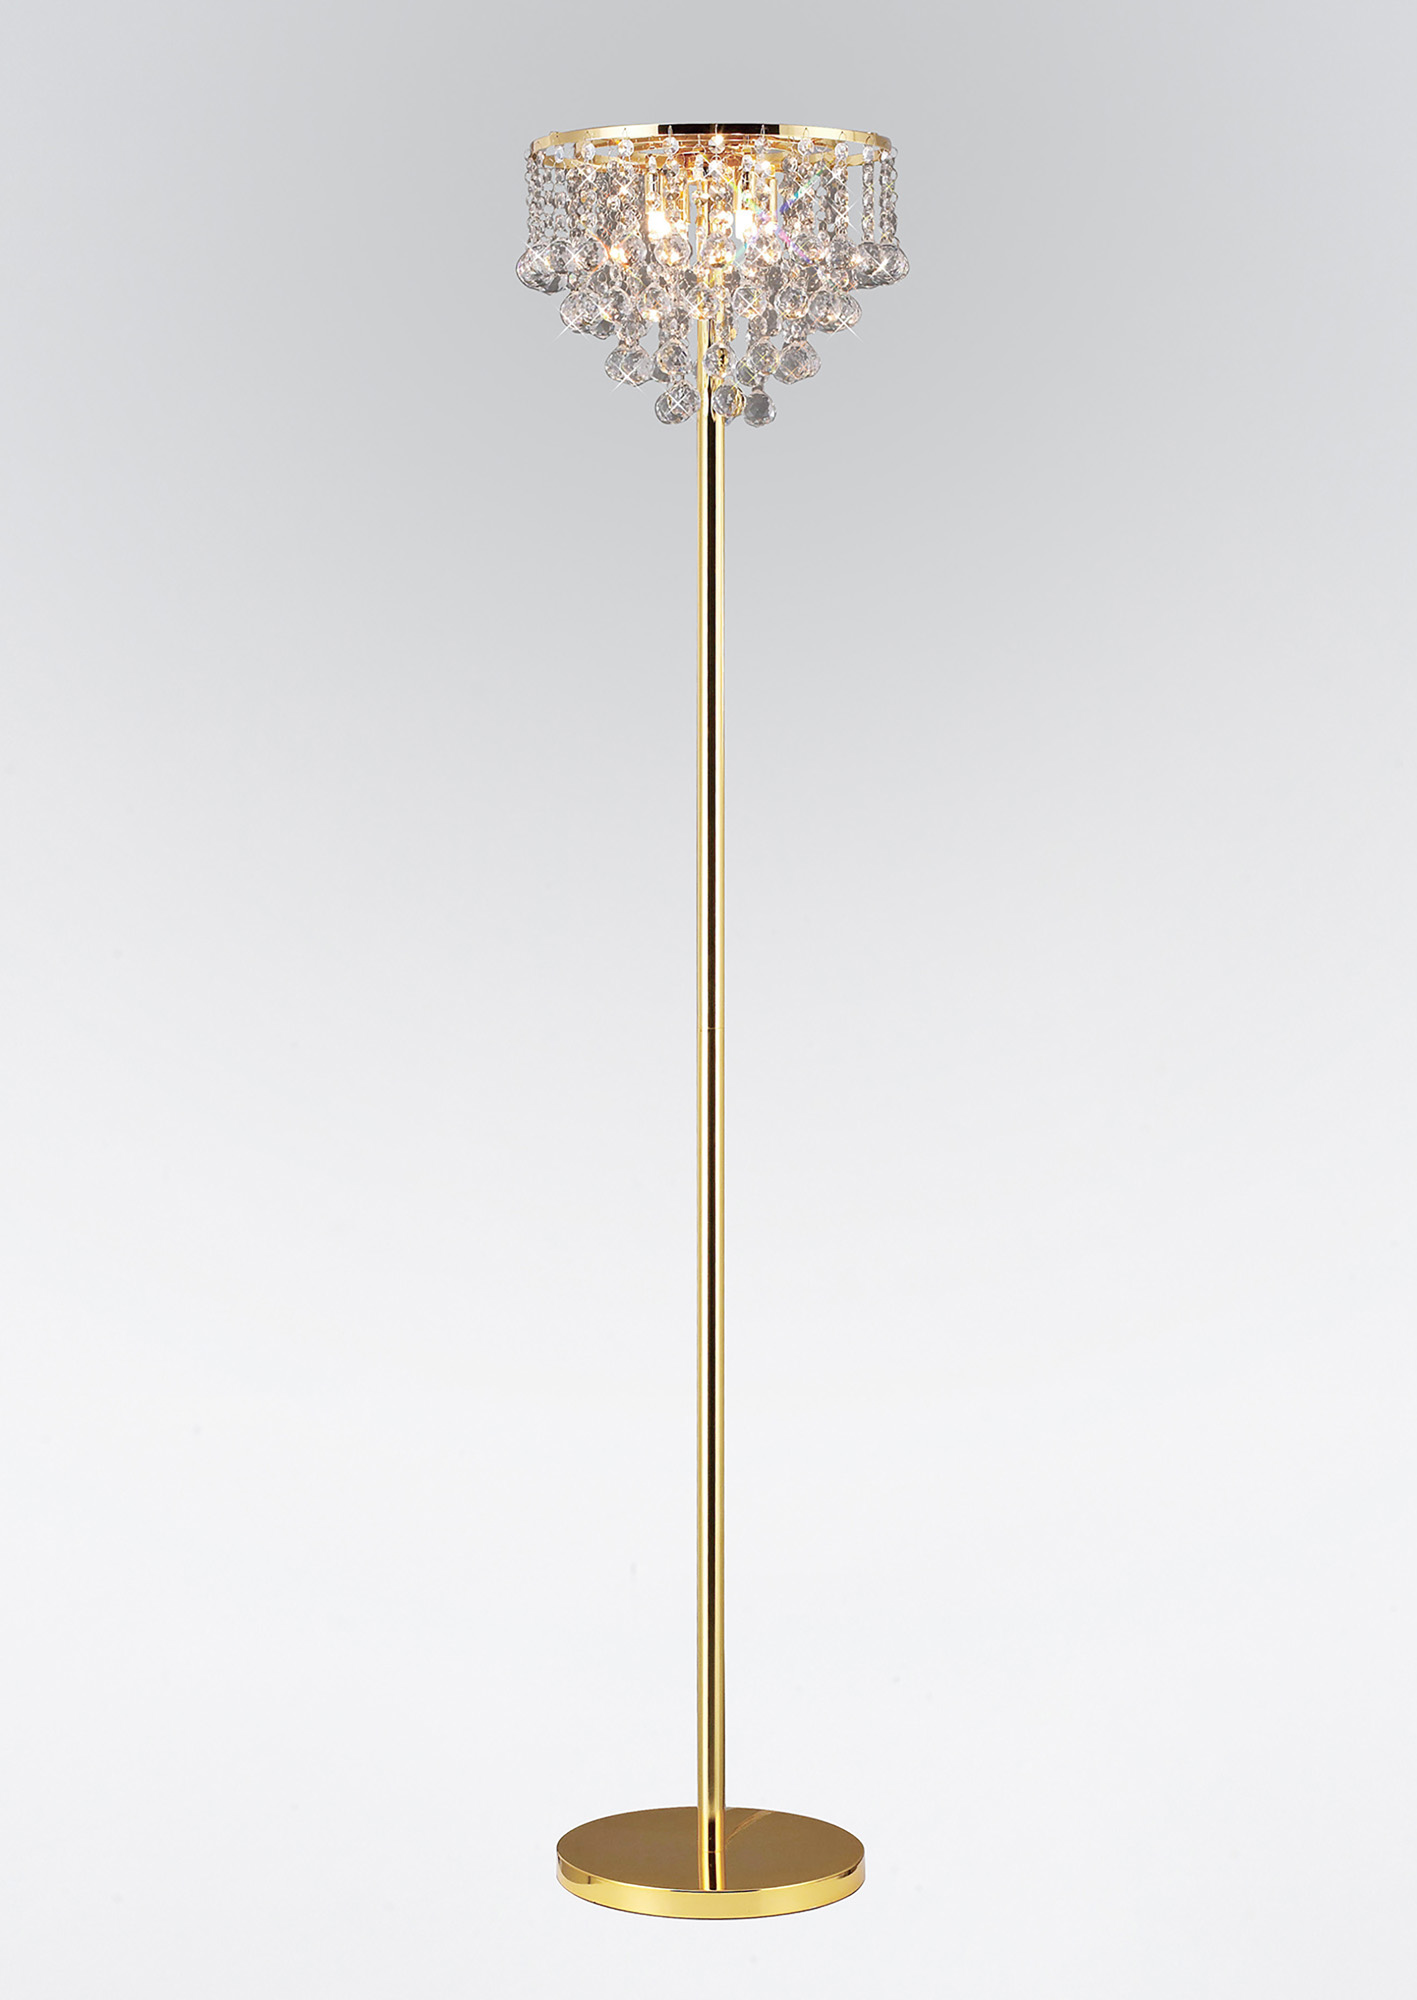 IL30032  Atla Crystal 155cm Floor Lamp 4 Light French Gold